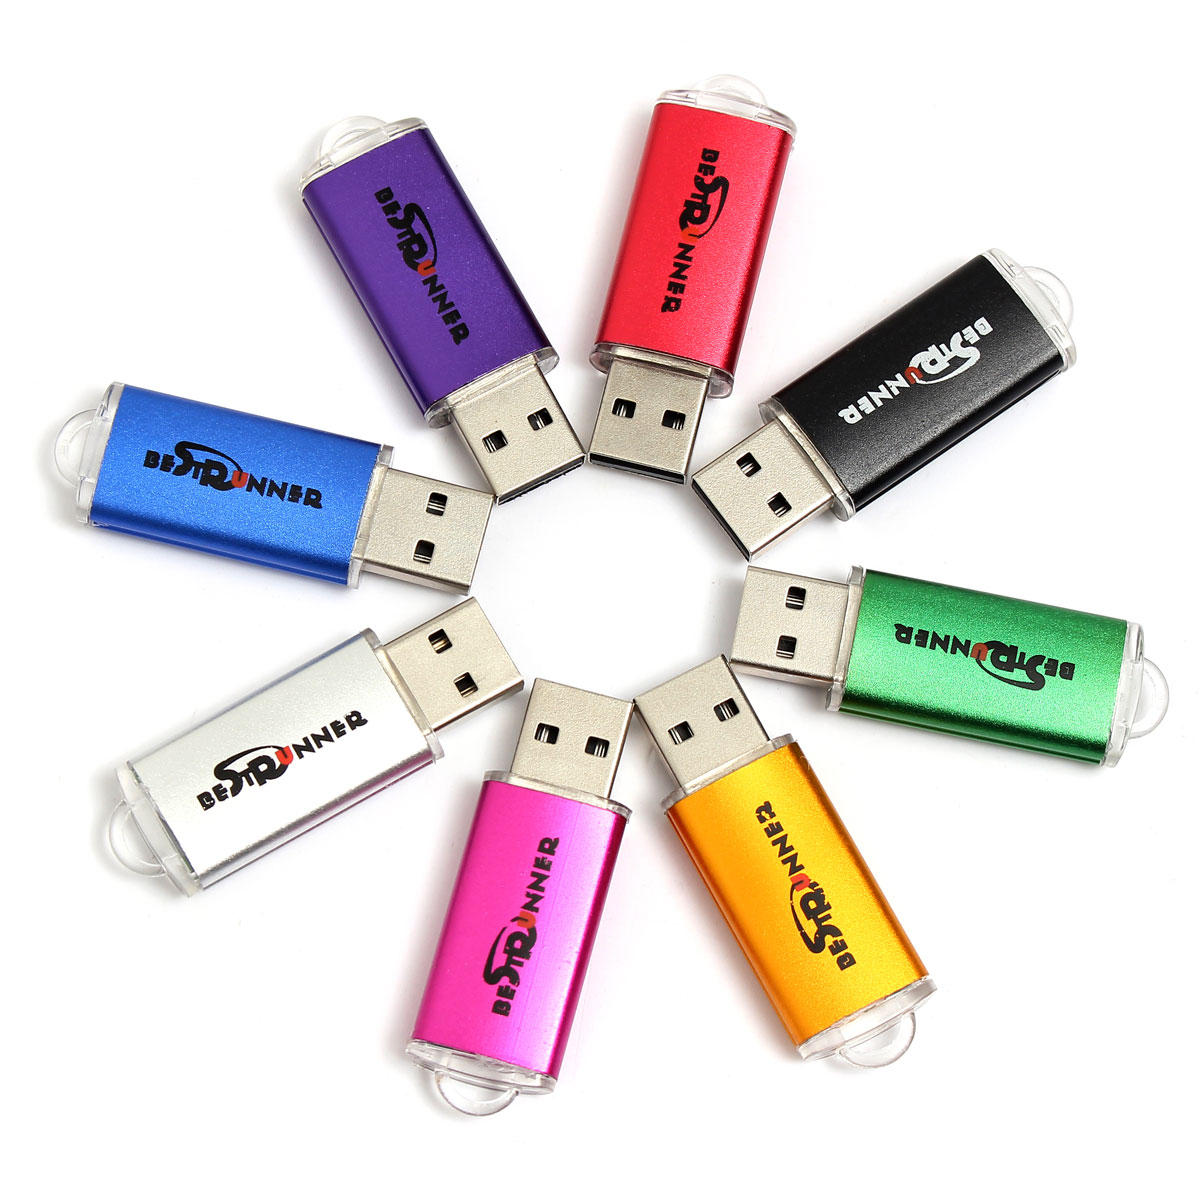 BESTRUNNER USB Flash Drive 2.0 Flash Memory Stick Pen Drive Opslag Duim U Schijf 64MB